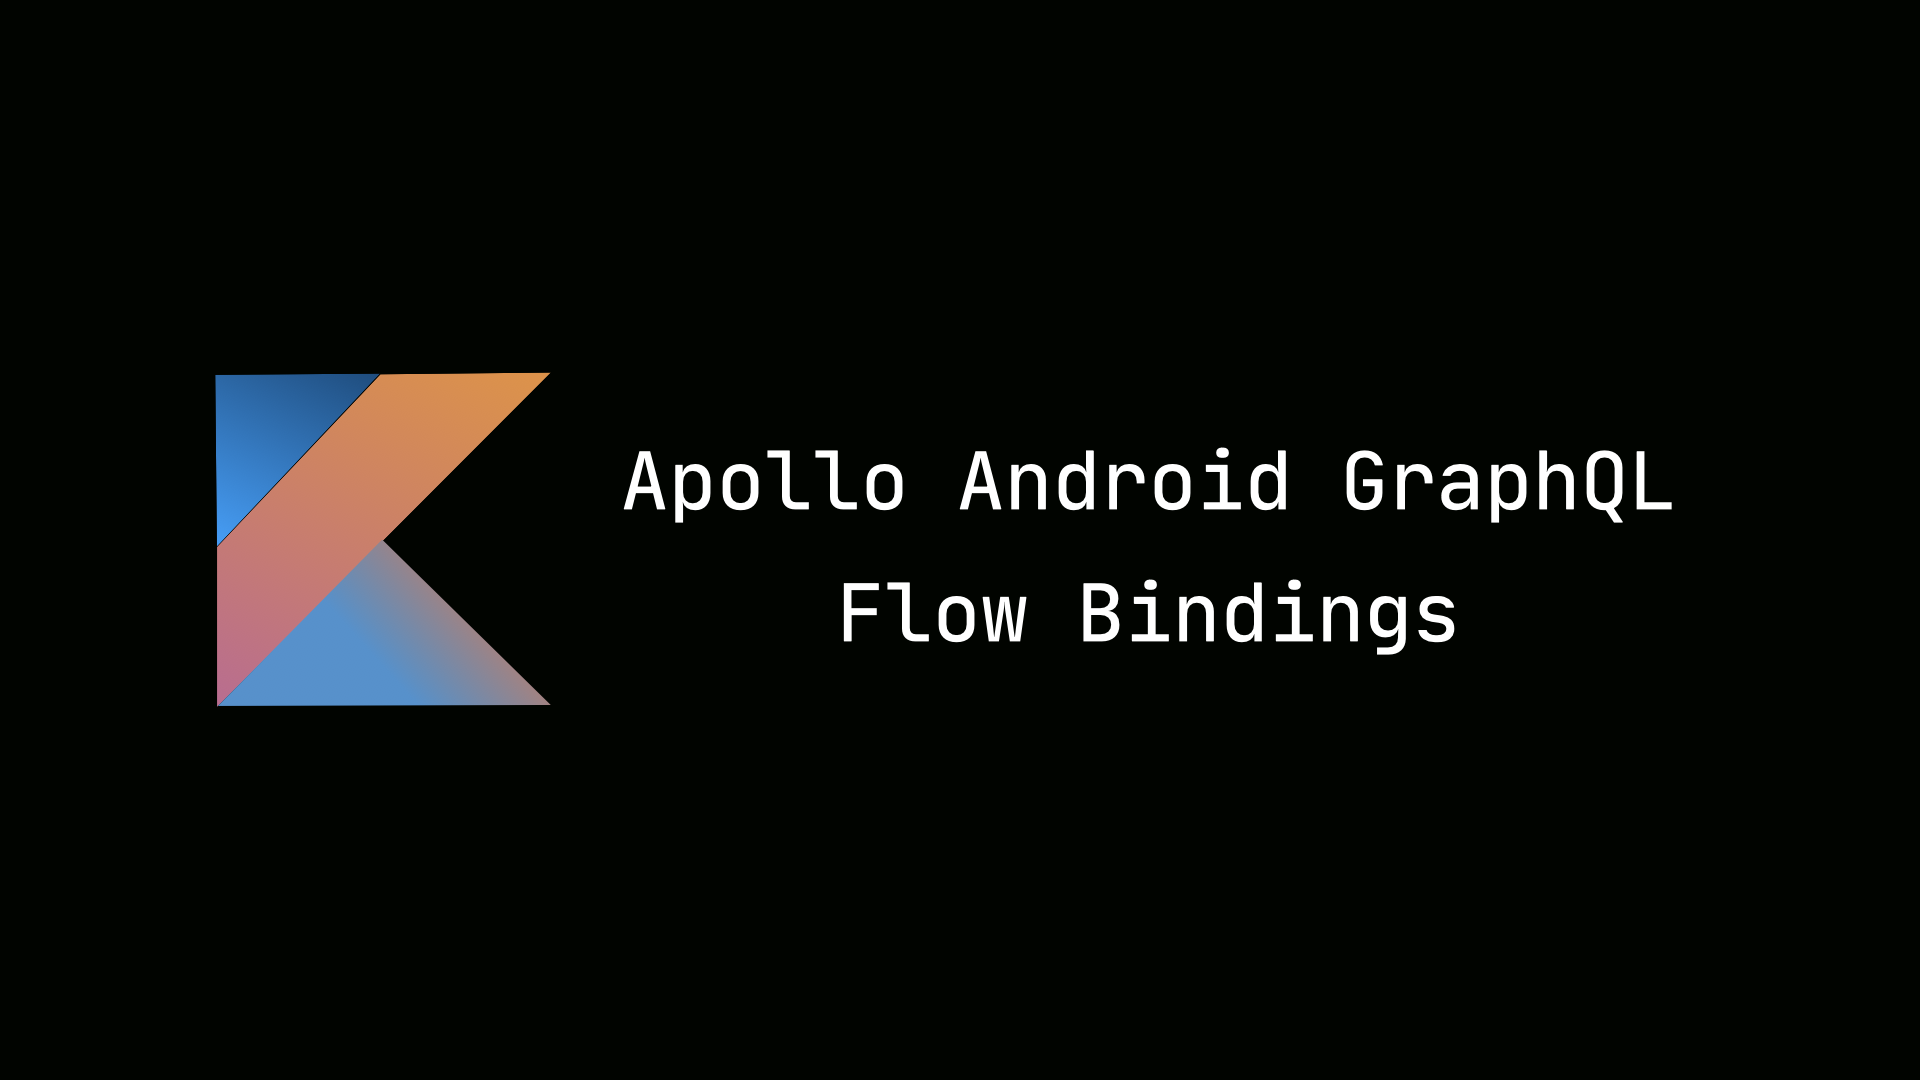 Apollo Android GraphQL Flow Bindings